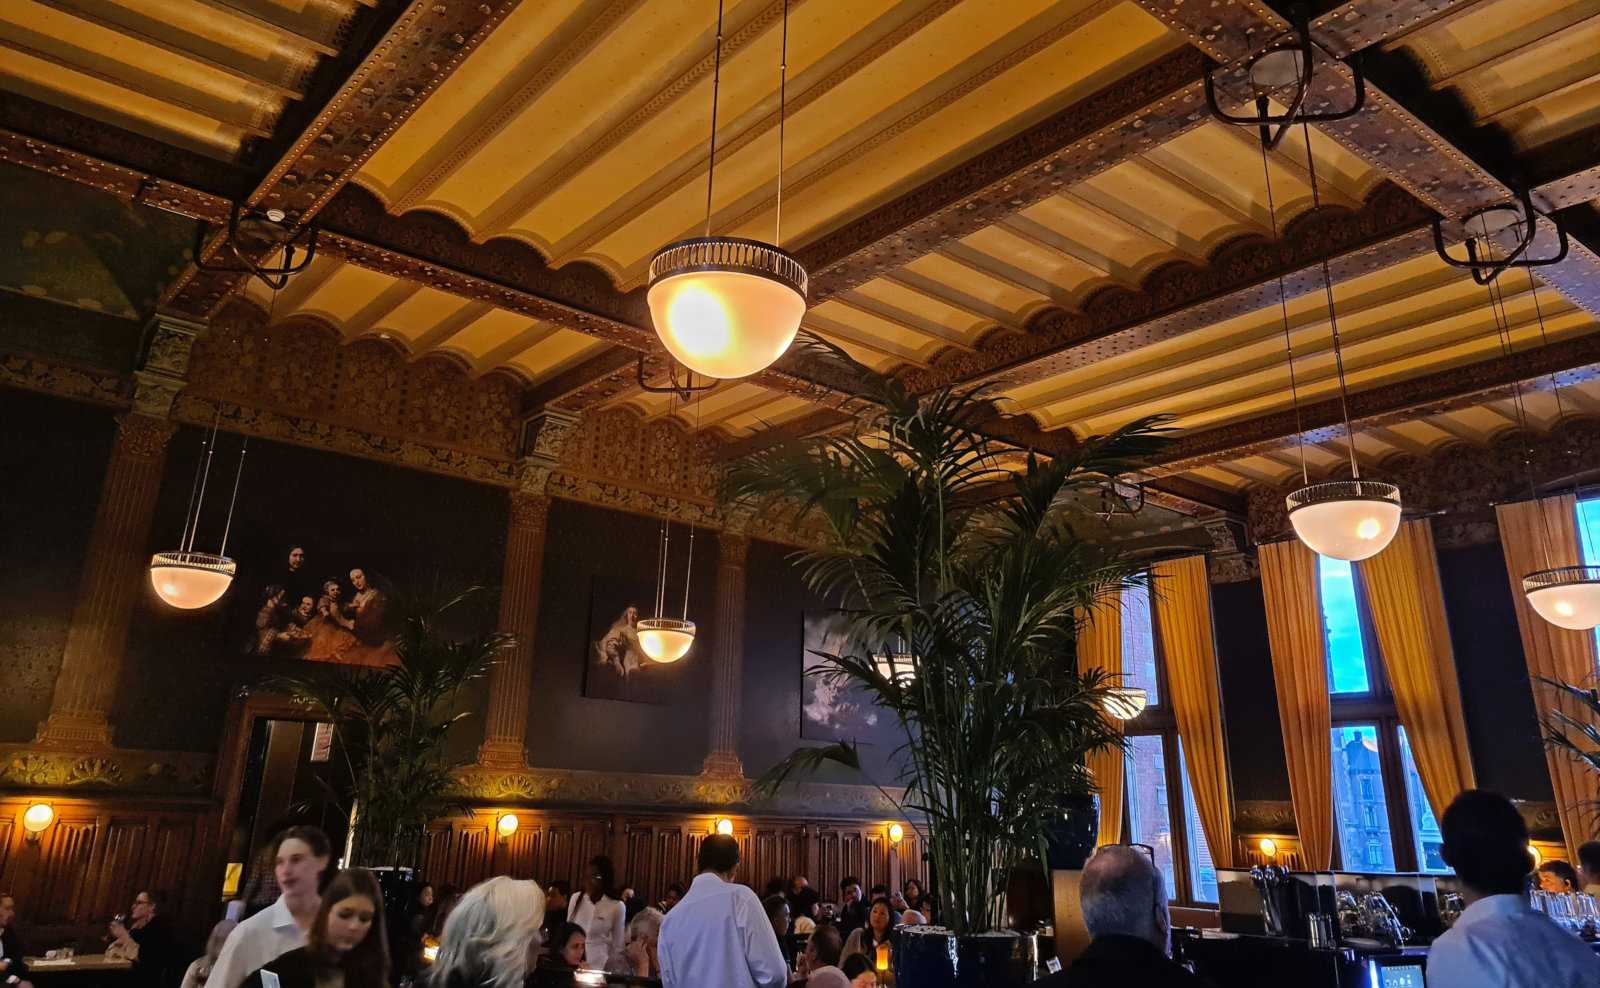 Inside Grand Cafe Restaurant 1e Klas in Amsterdam Centraal station.